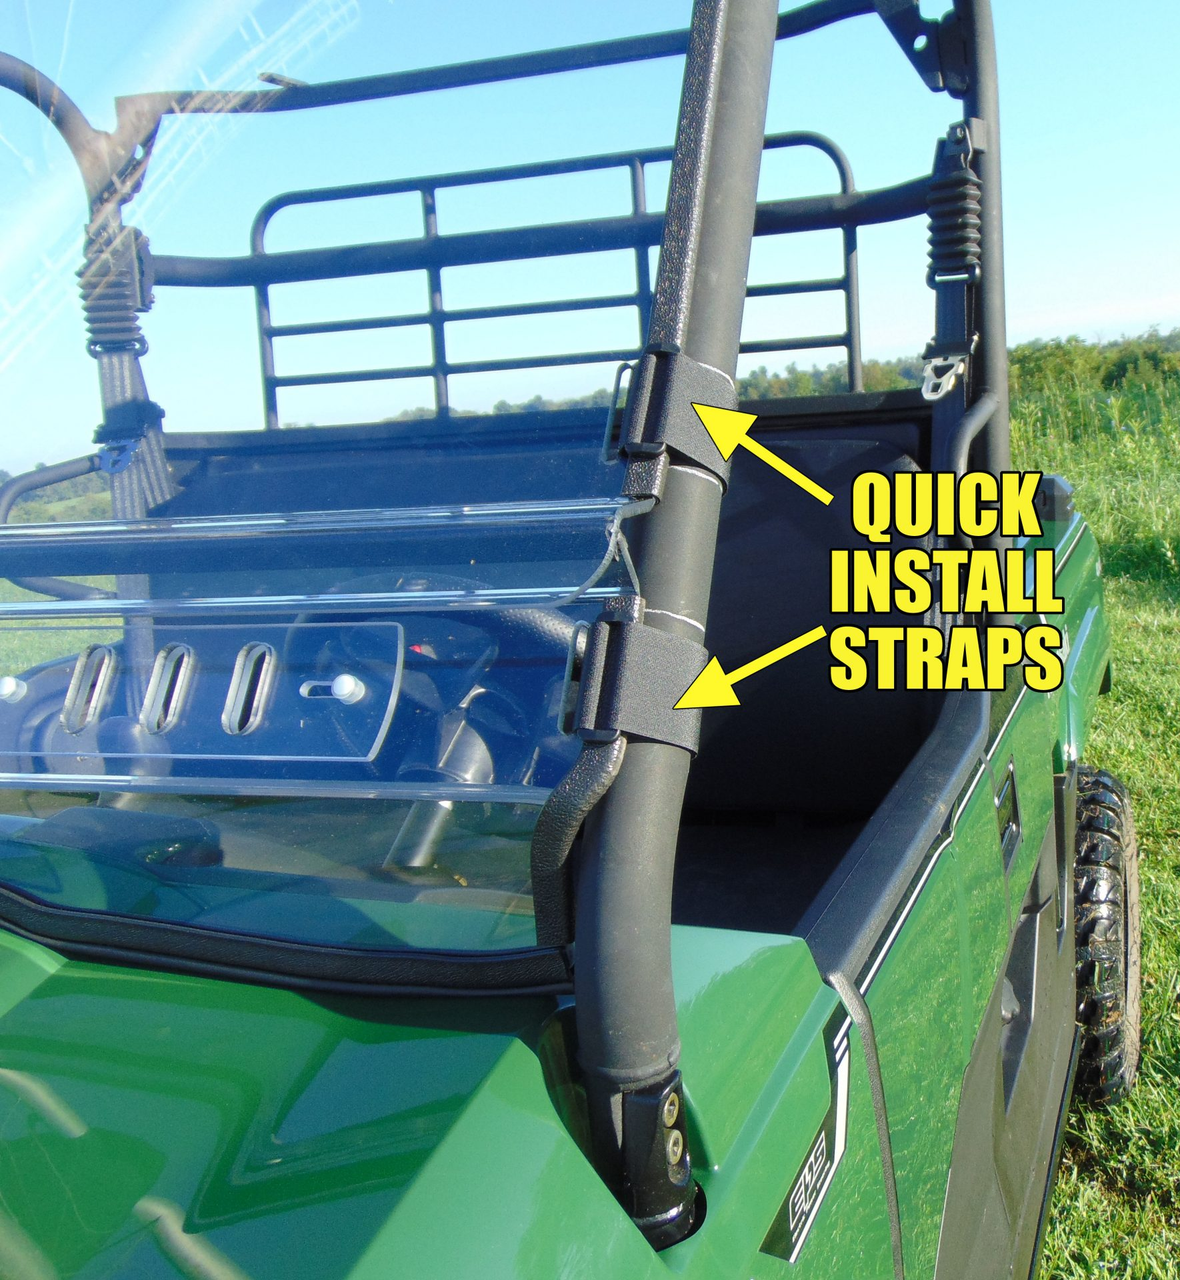 3 Star side x side John Deere Gator UXV 550/560/590 S4 windshield  quick install straps